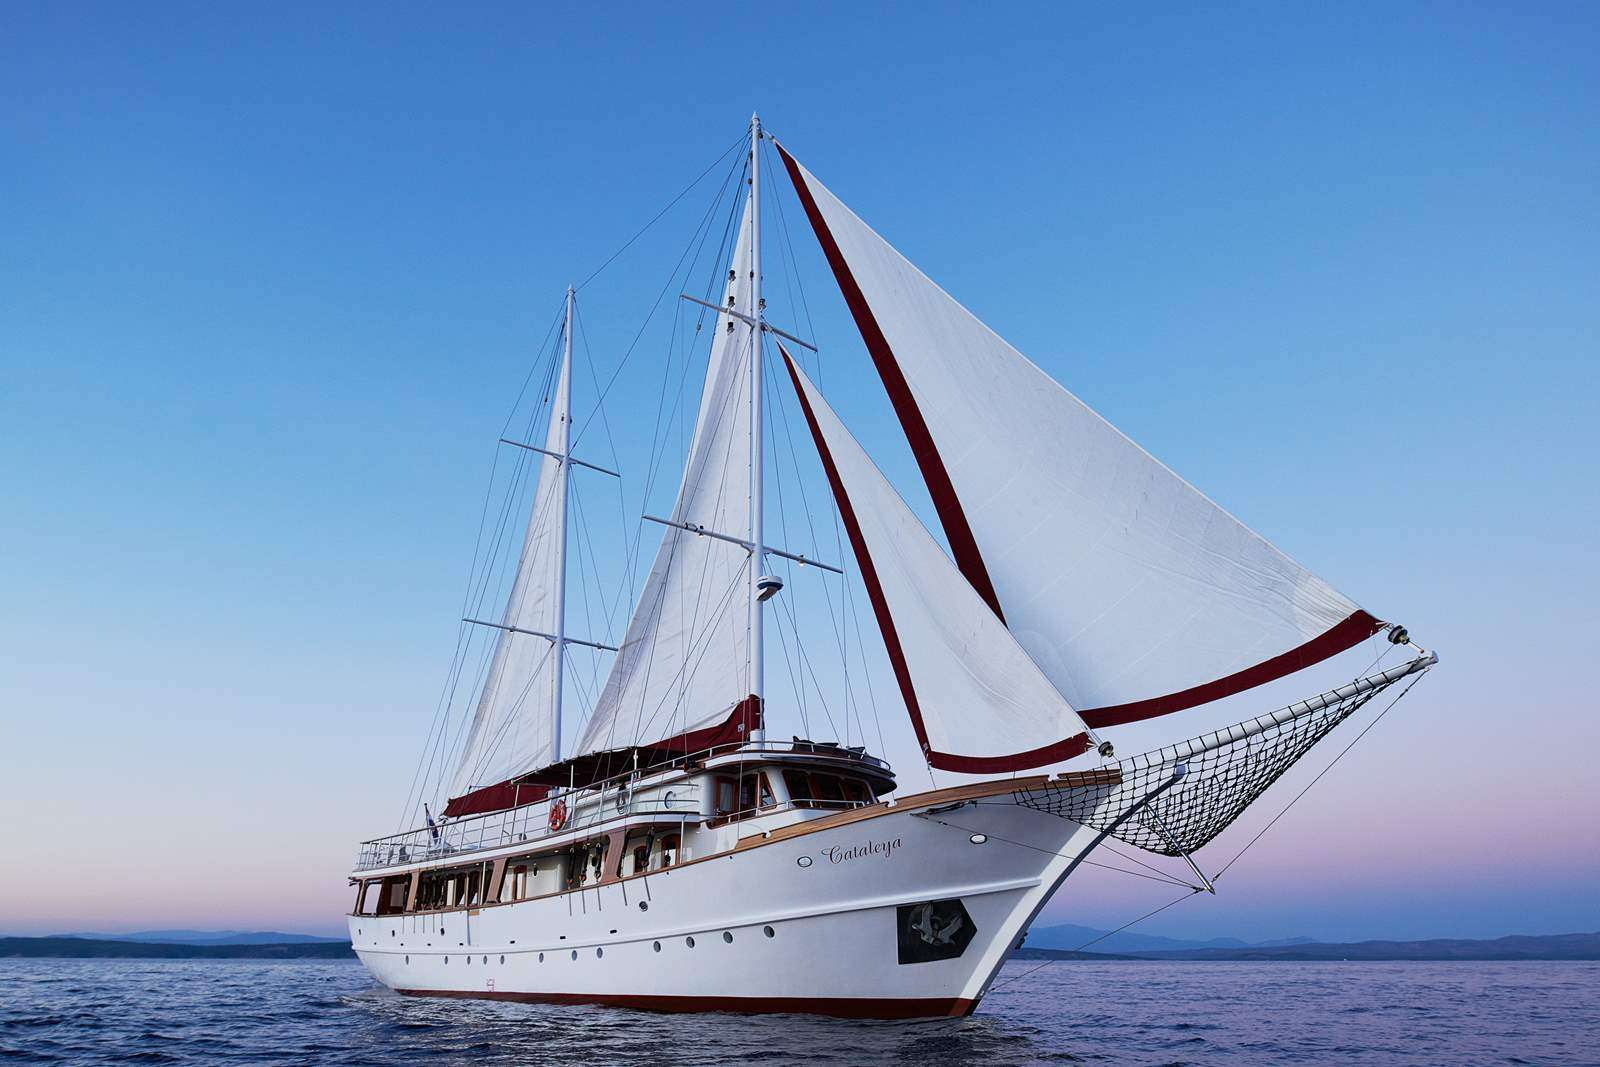 Motor Sailing Yacht 'CATALEYA', 21 PAX, 6 Crew, 111.00 Ft, 34.00 Meters, Built 2009, Custom, Refit Year 2020